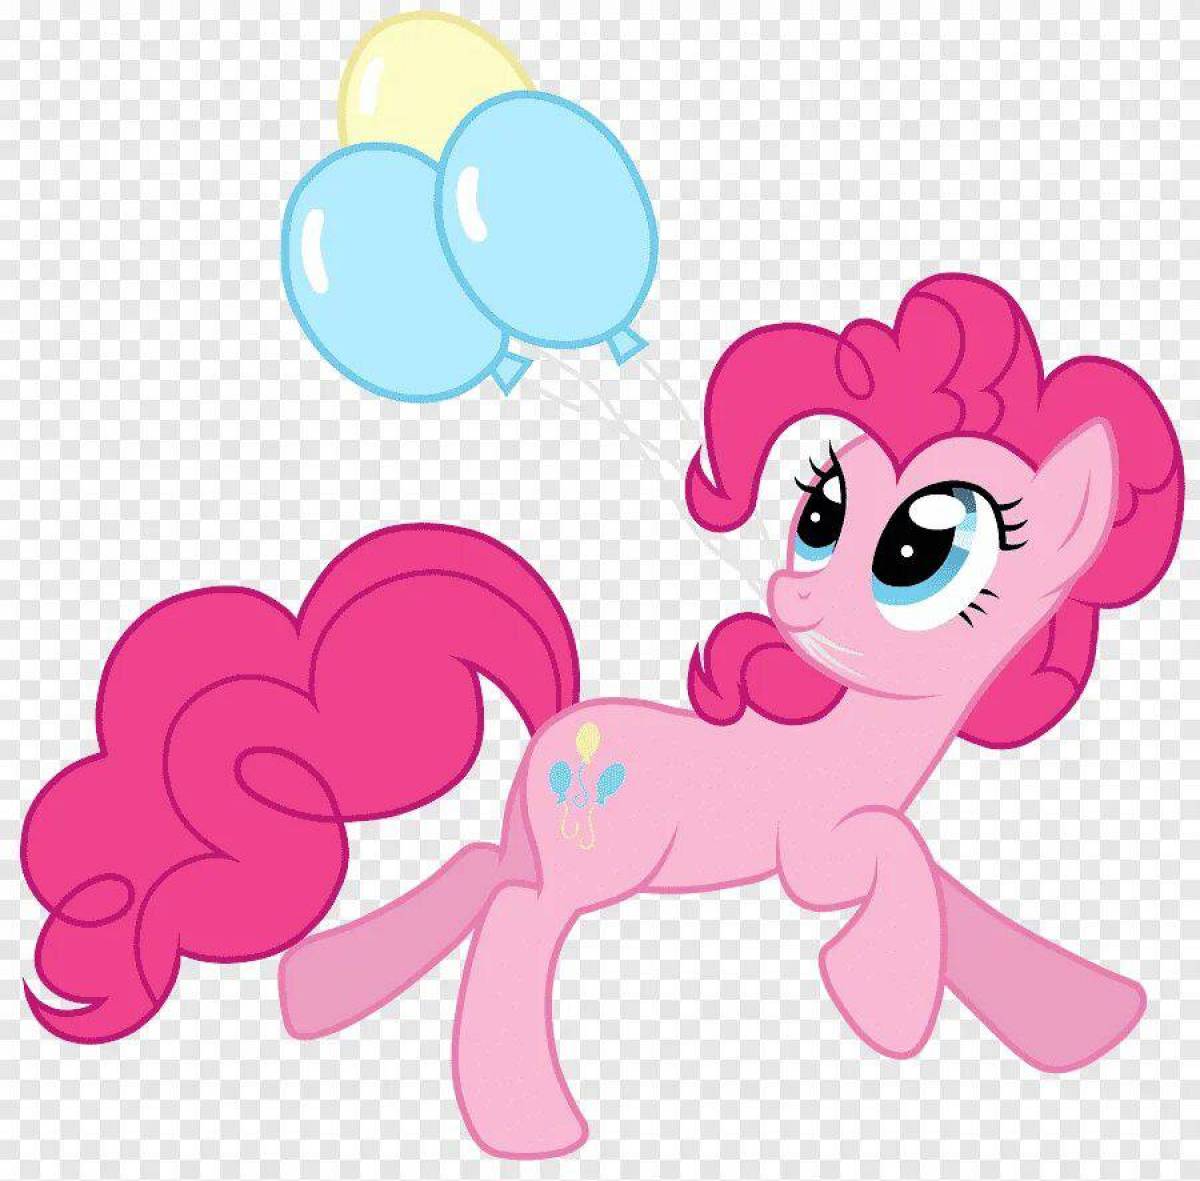 Little pony pinkie. My little Pony ПИНКИПАИ. My little Pony Пинки. Май Литлл понт ринкипай. Пони Пинки Пай маленькая.